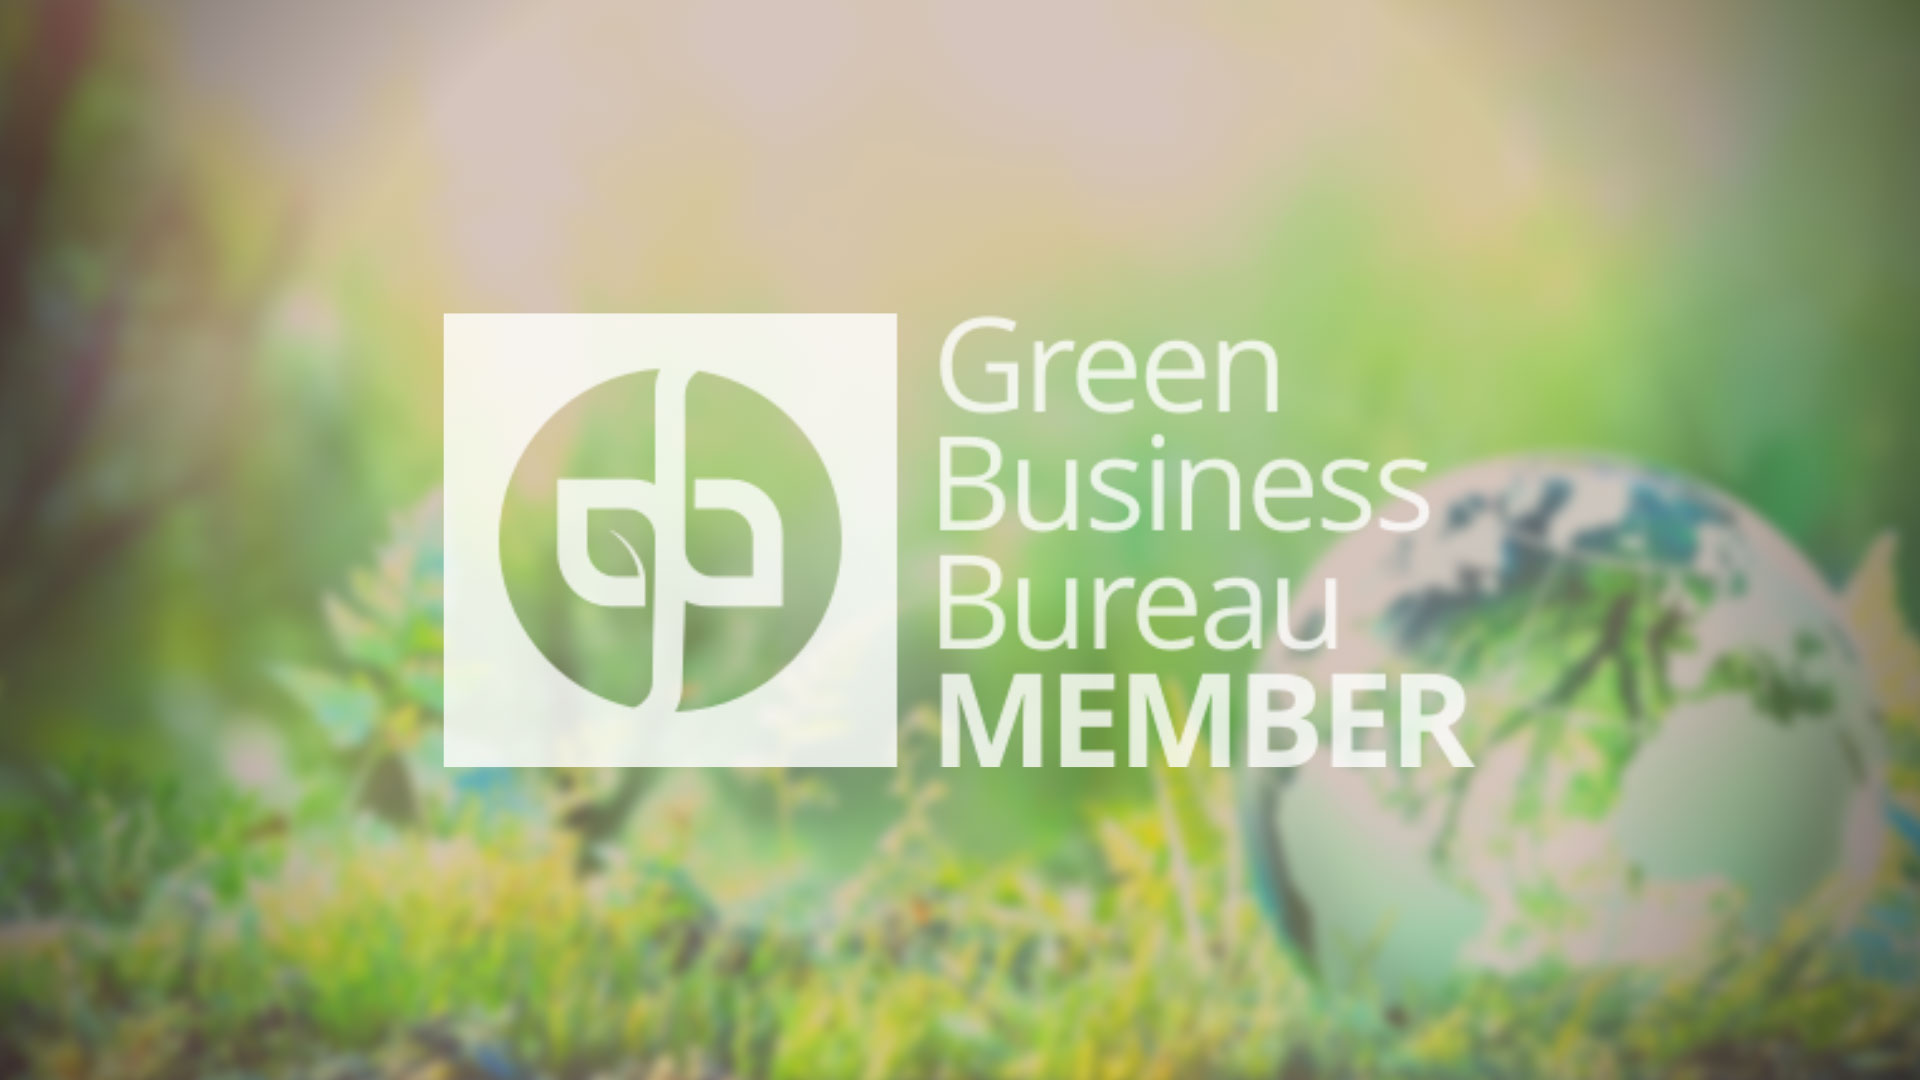 SPECTRAFORCE: Green Business Bureau Member Story